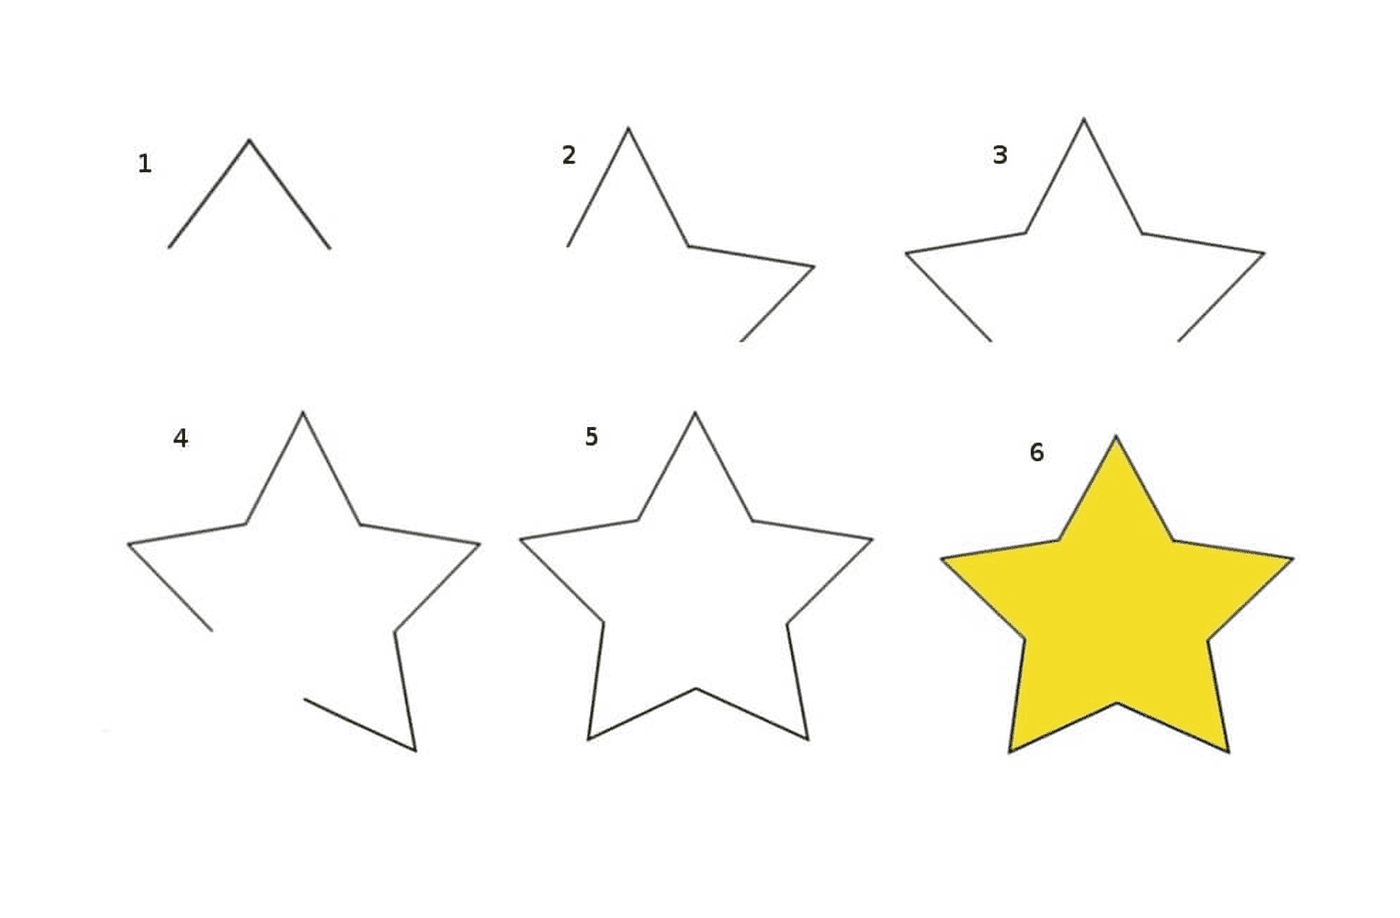  Cinque diverse forme di stelle gialle 